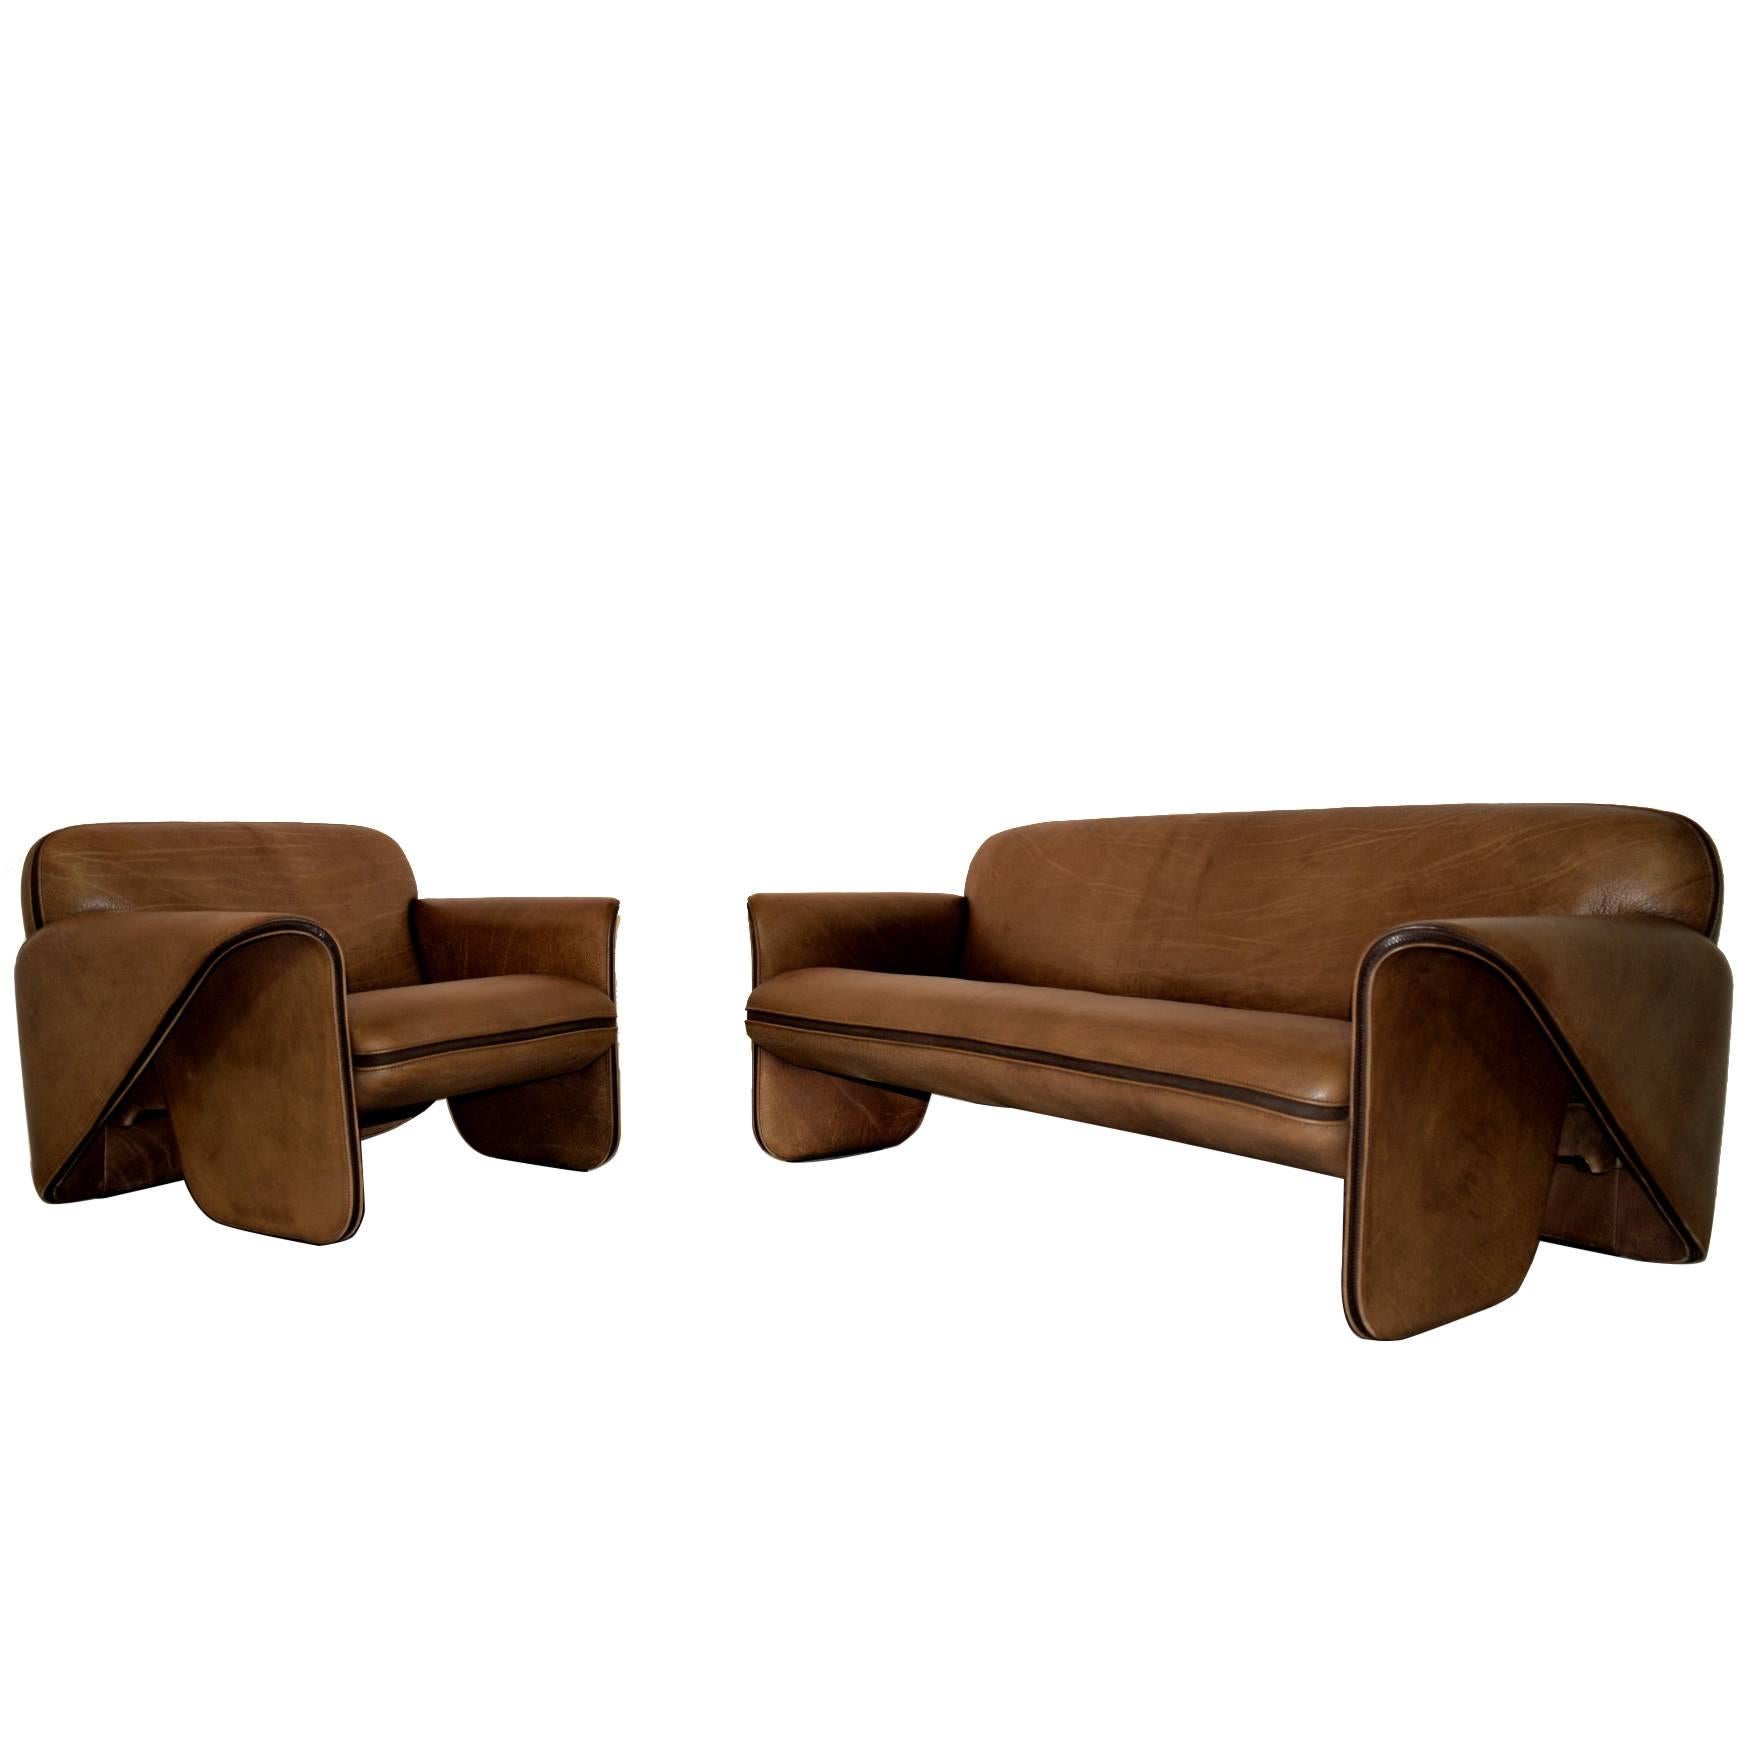 Vintage Swiss De Sede 'DS 125' Sofa and Armchair Designed by Gerd Lange, 1978